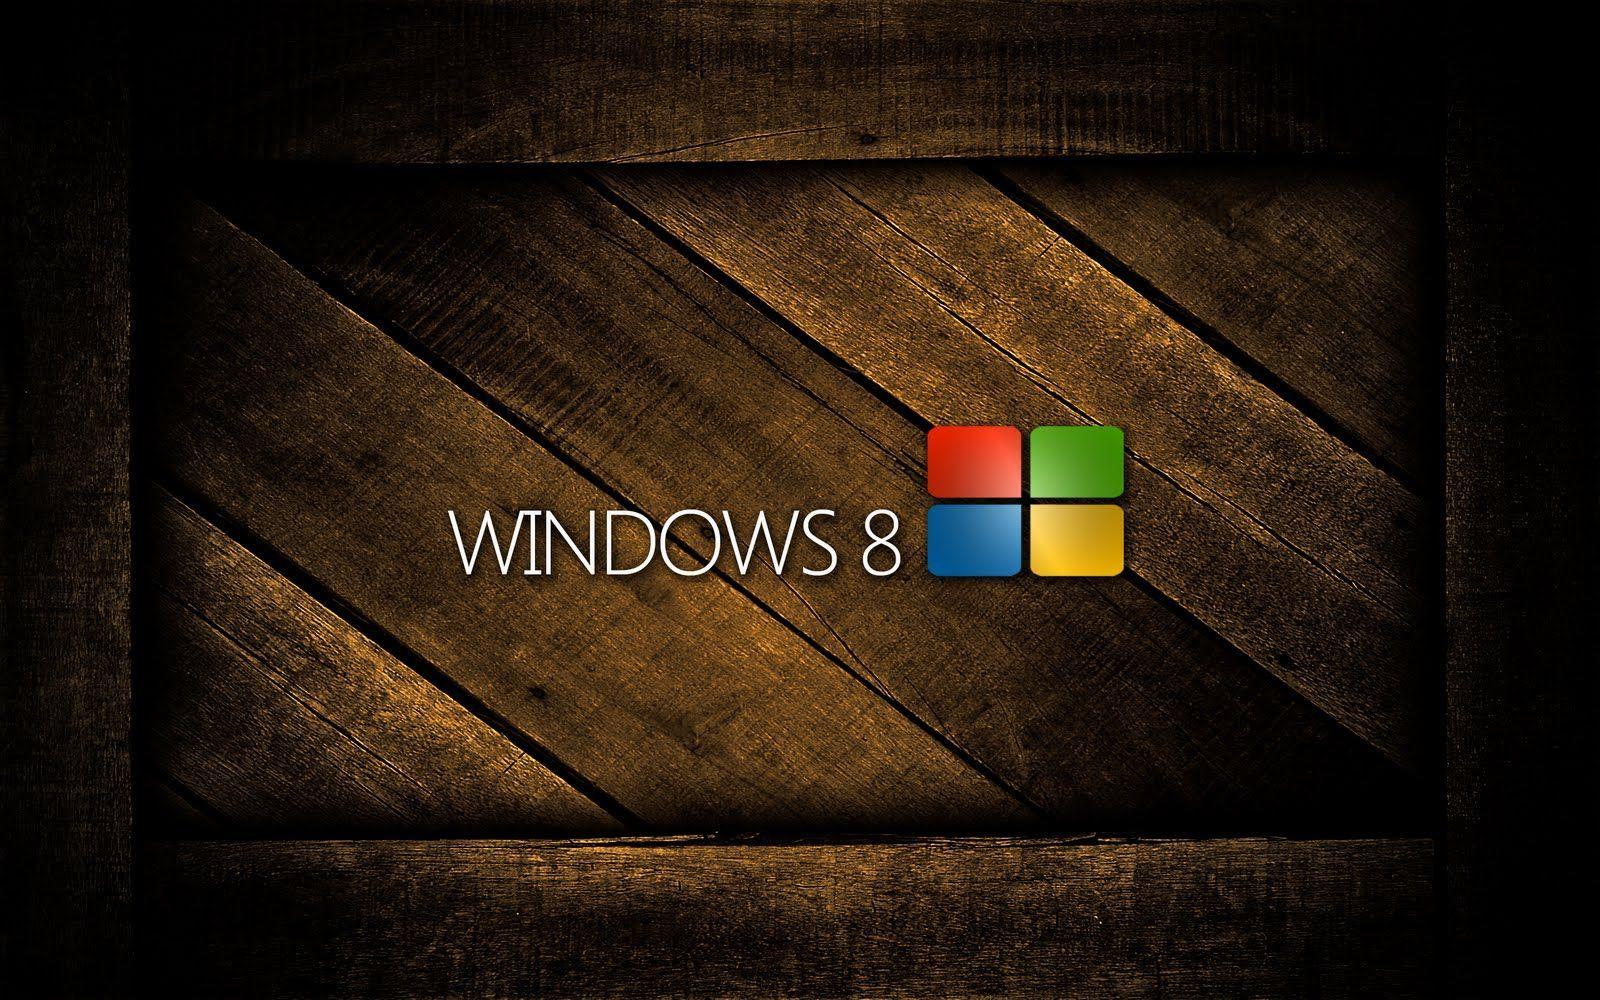 Windows 8 wooden effect Hd 1080 Wallpapers